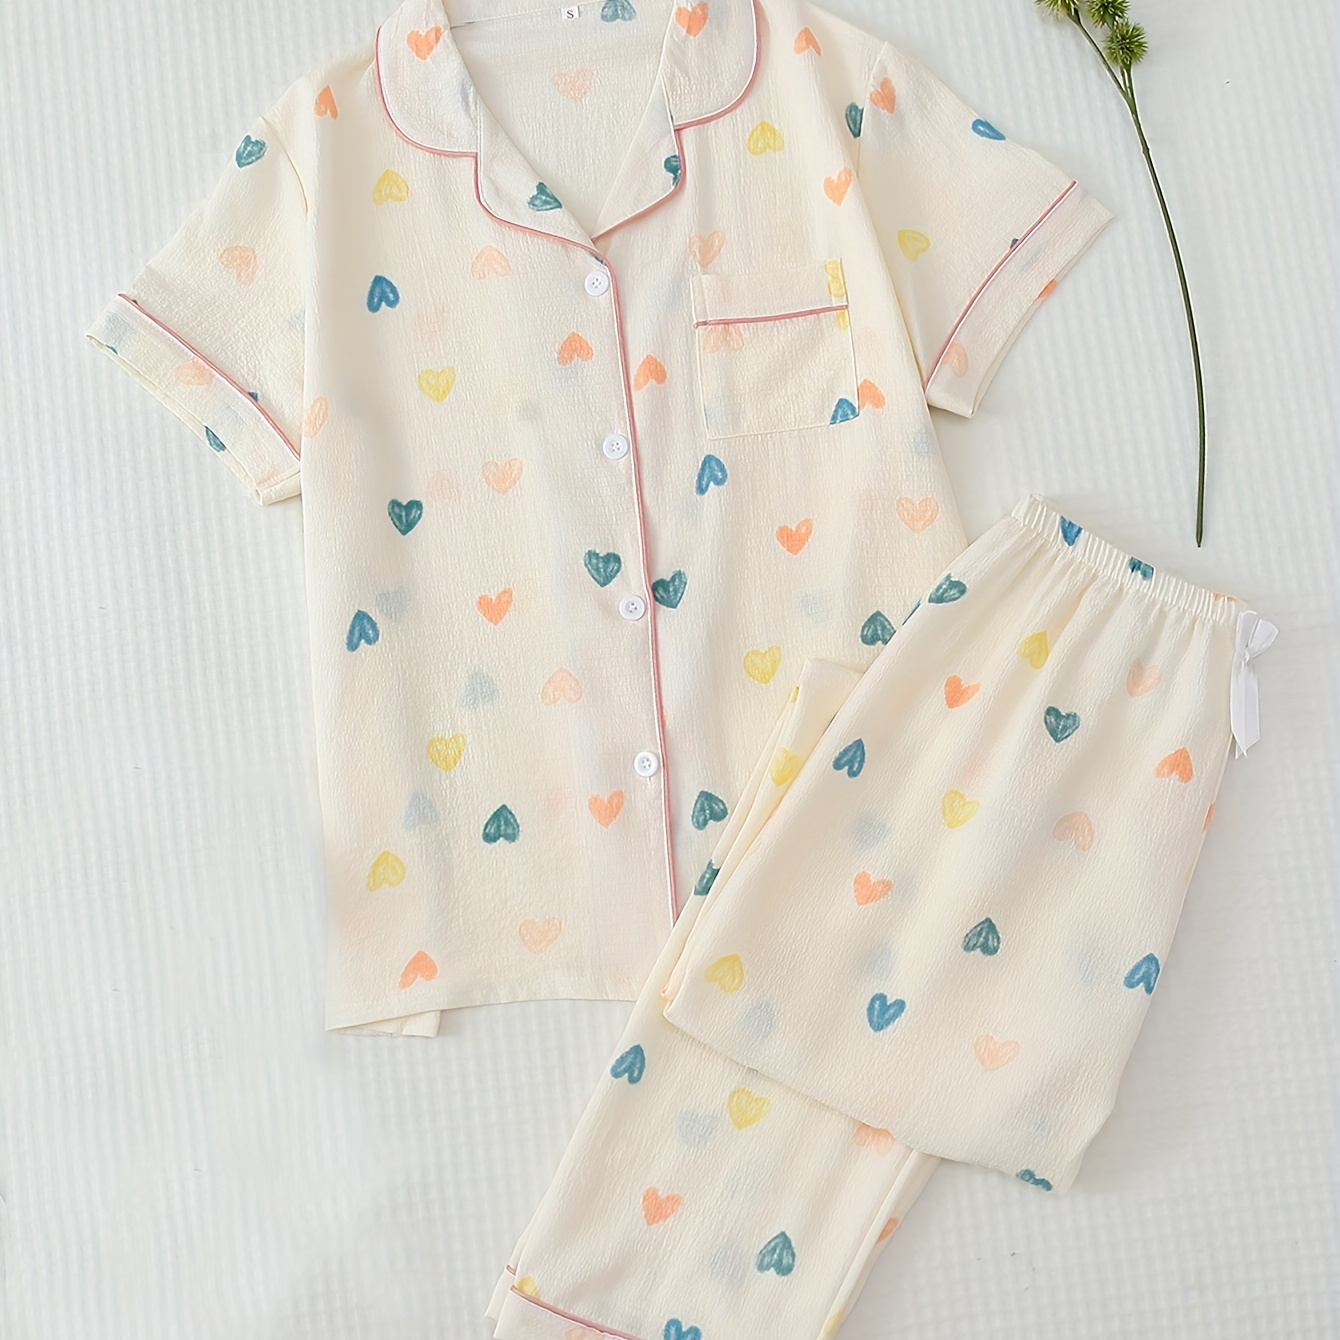 

Heart Print Pajama Set, Short Sleeve Button Up Top & Elastic Waistband Pants, Women's Sleepwear & Loungewear